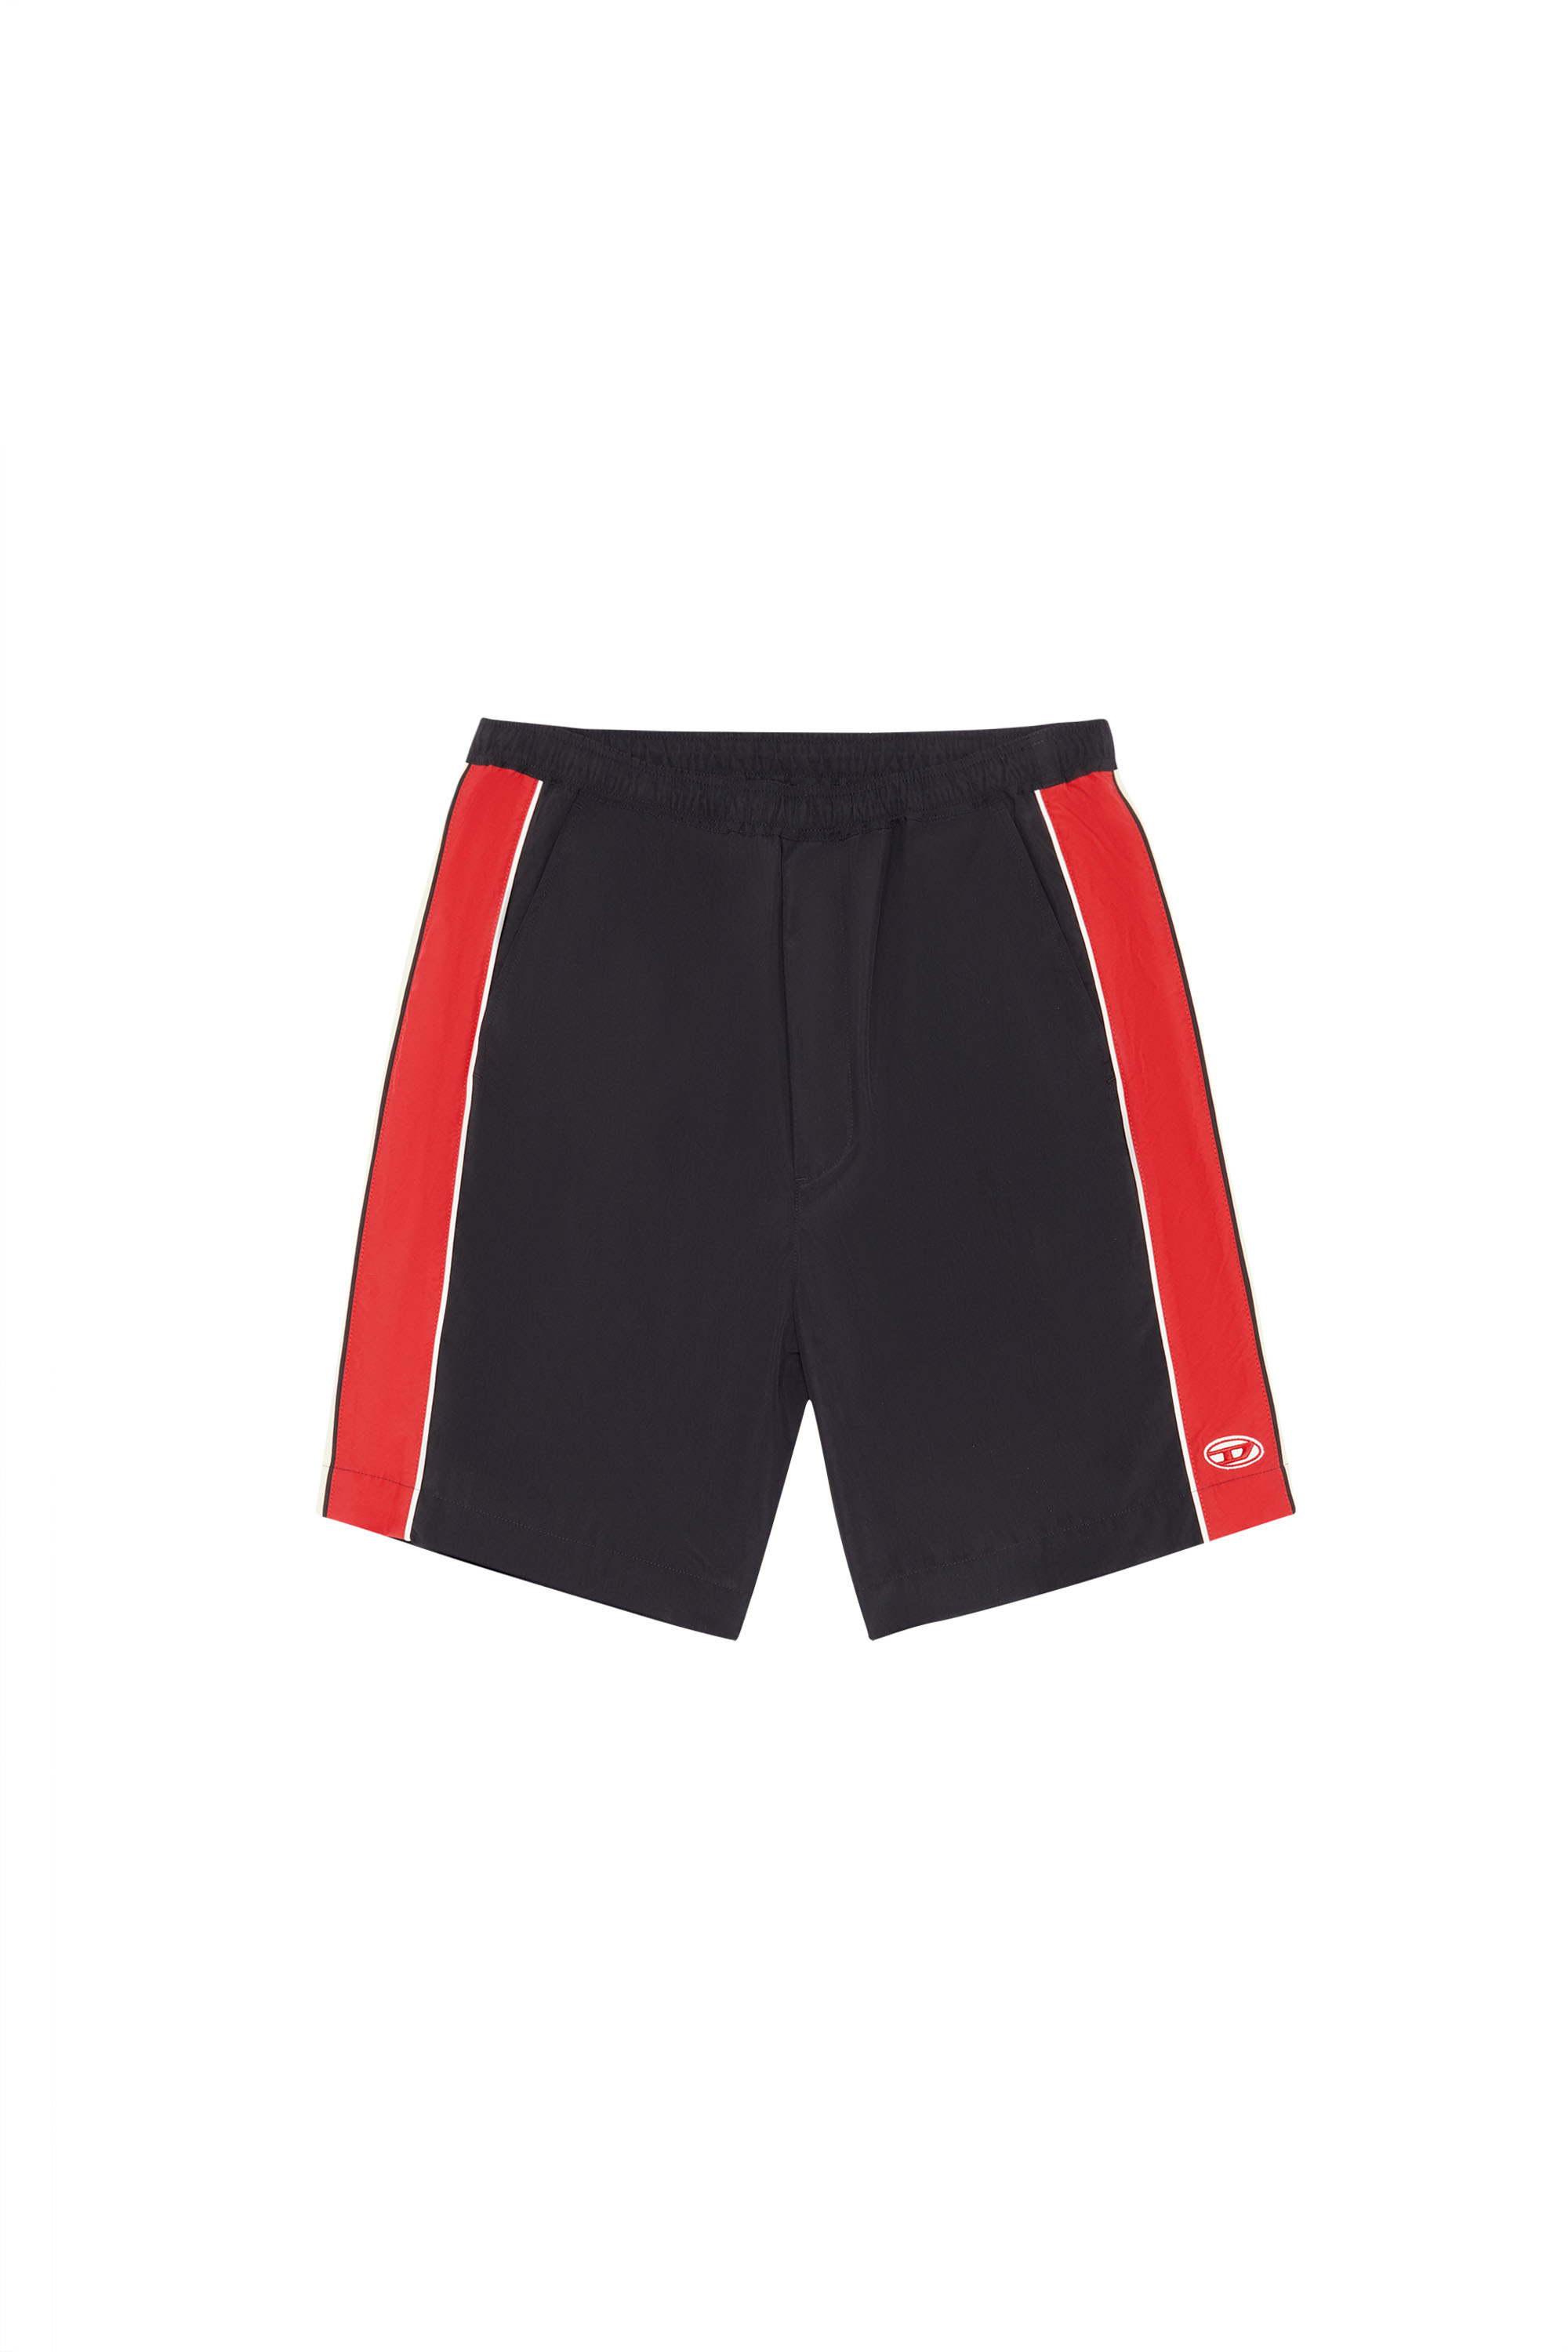 P-SPORTS-SHORT, Black/Red - Shorts